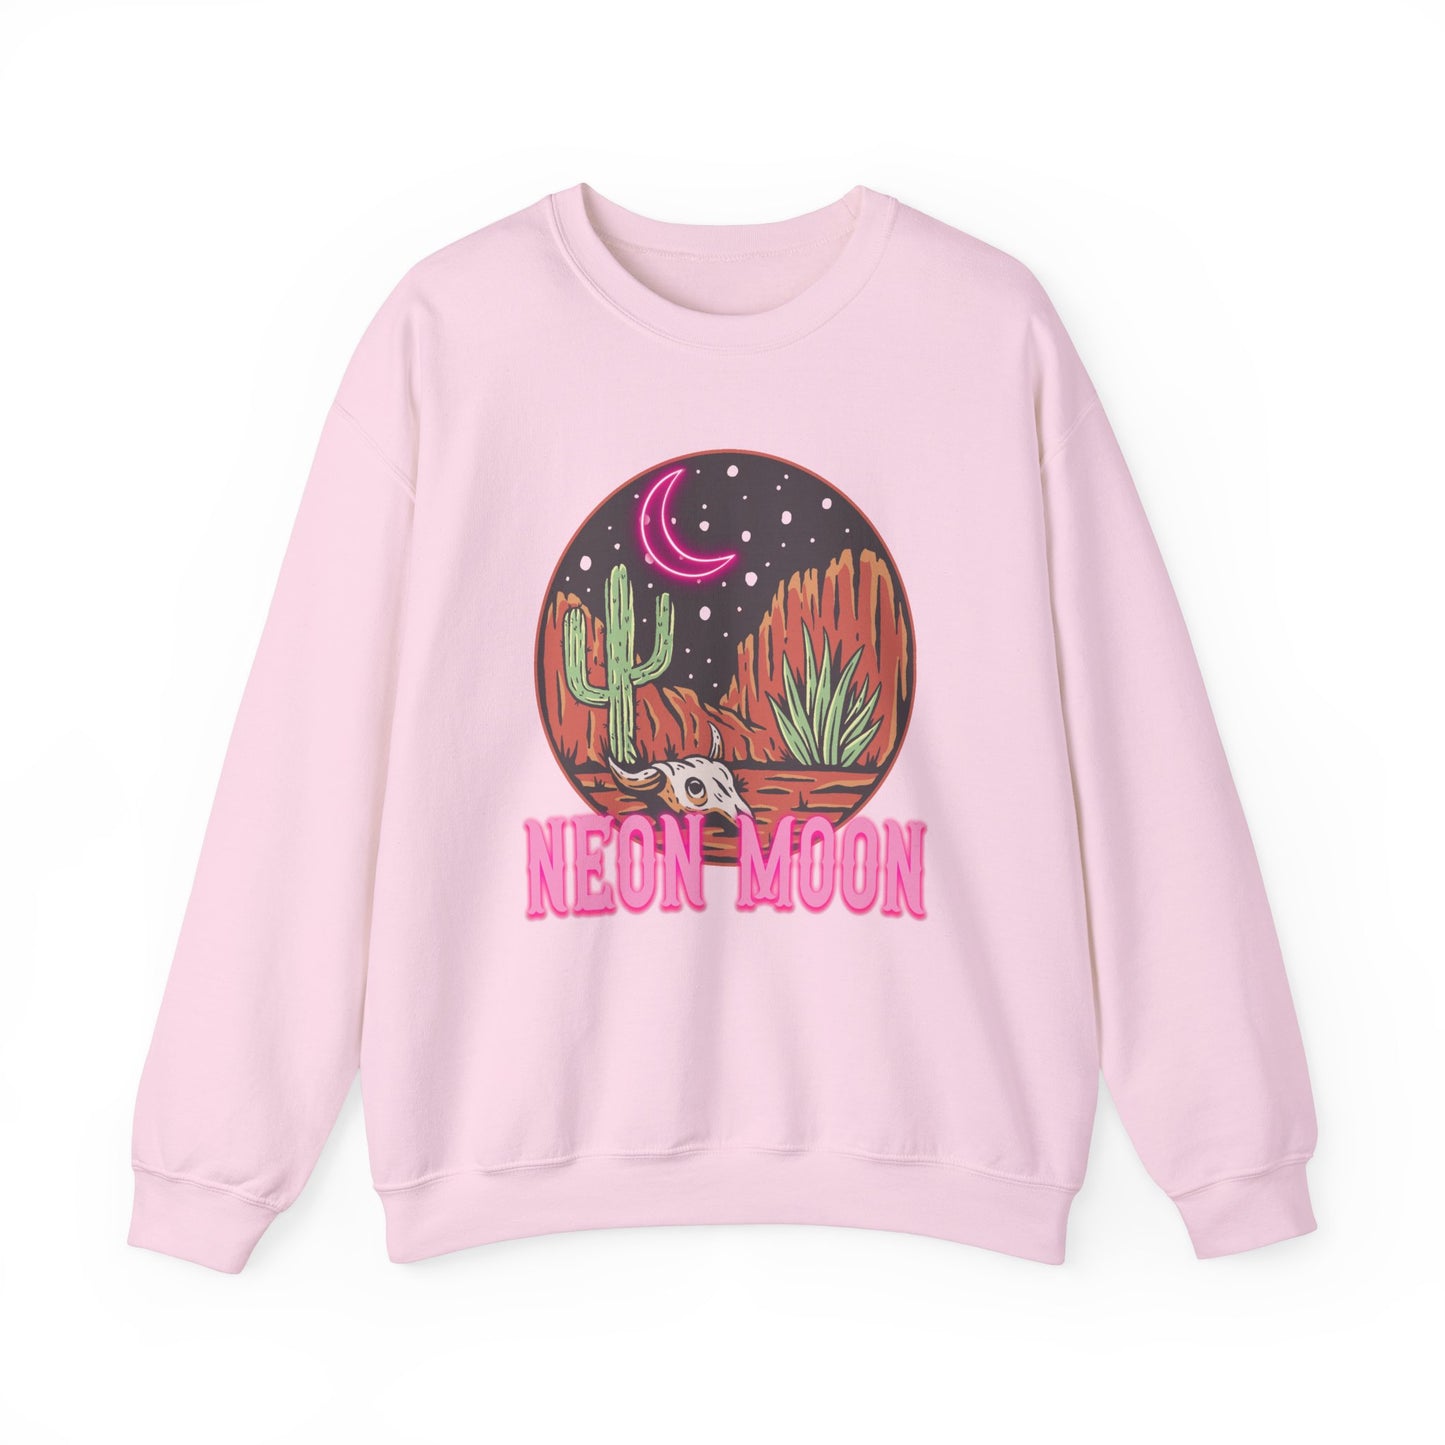 Neon Moon Crewneck Sweatshirt